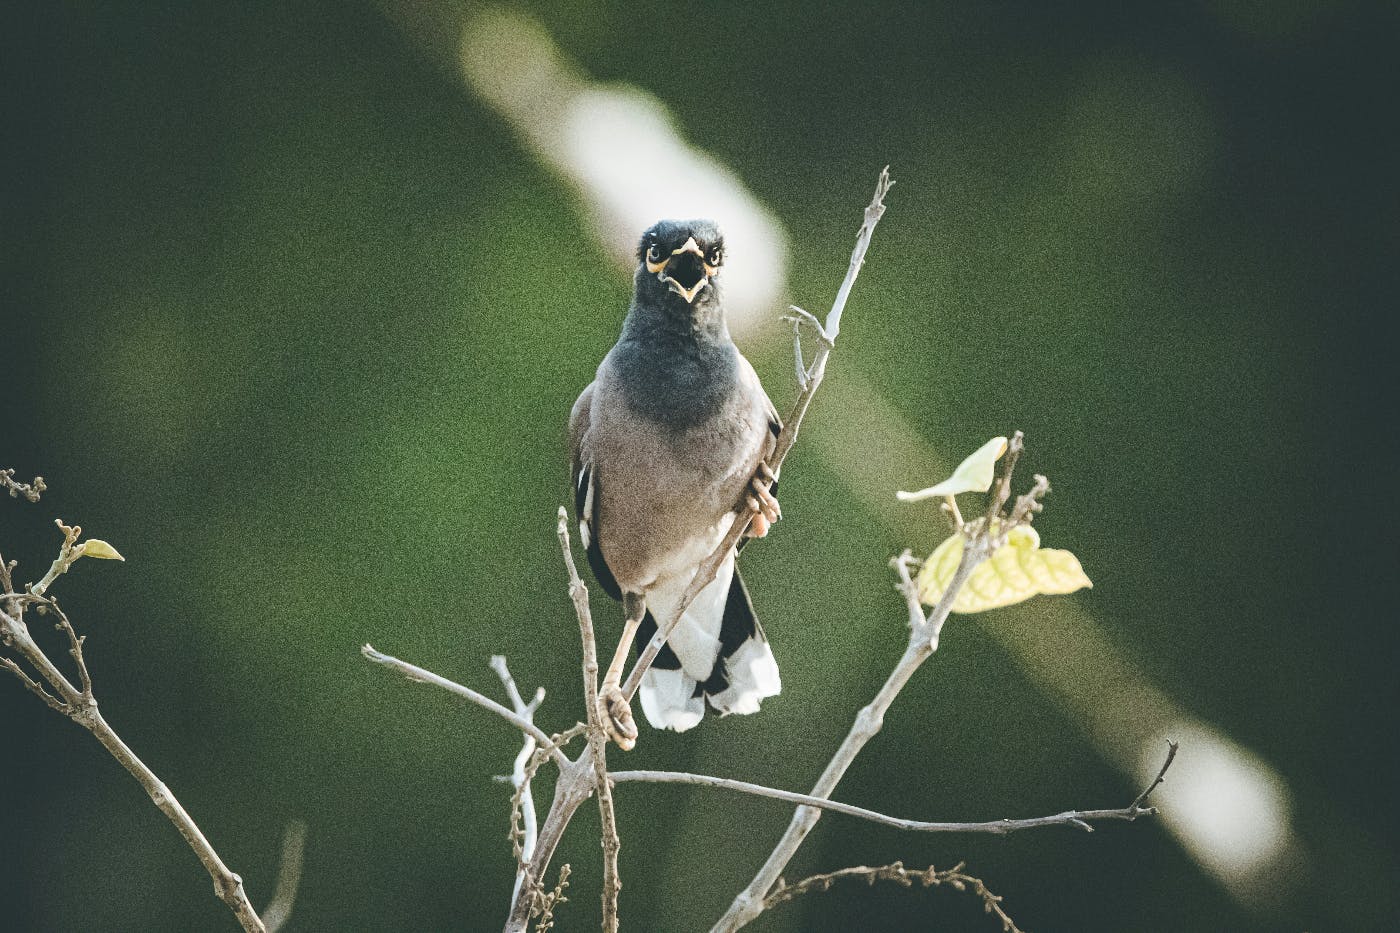 A bird on a branch singing